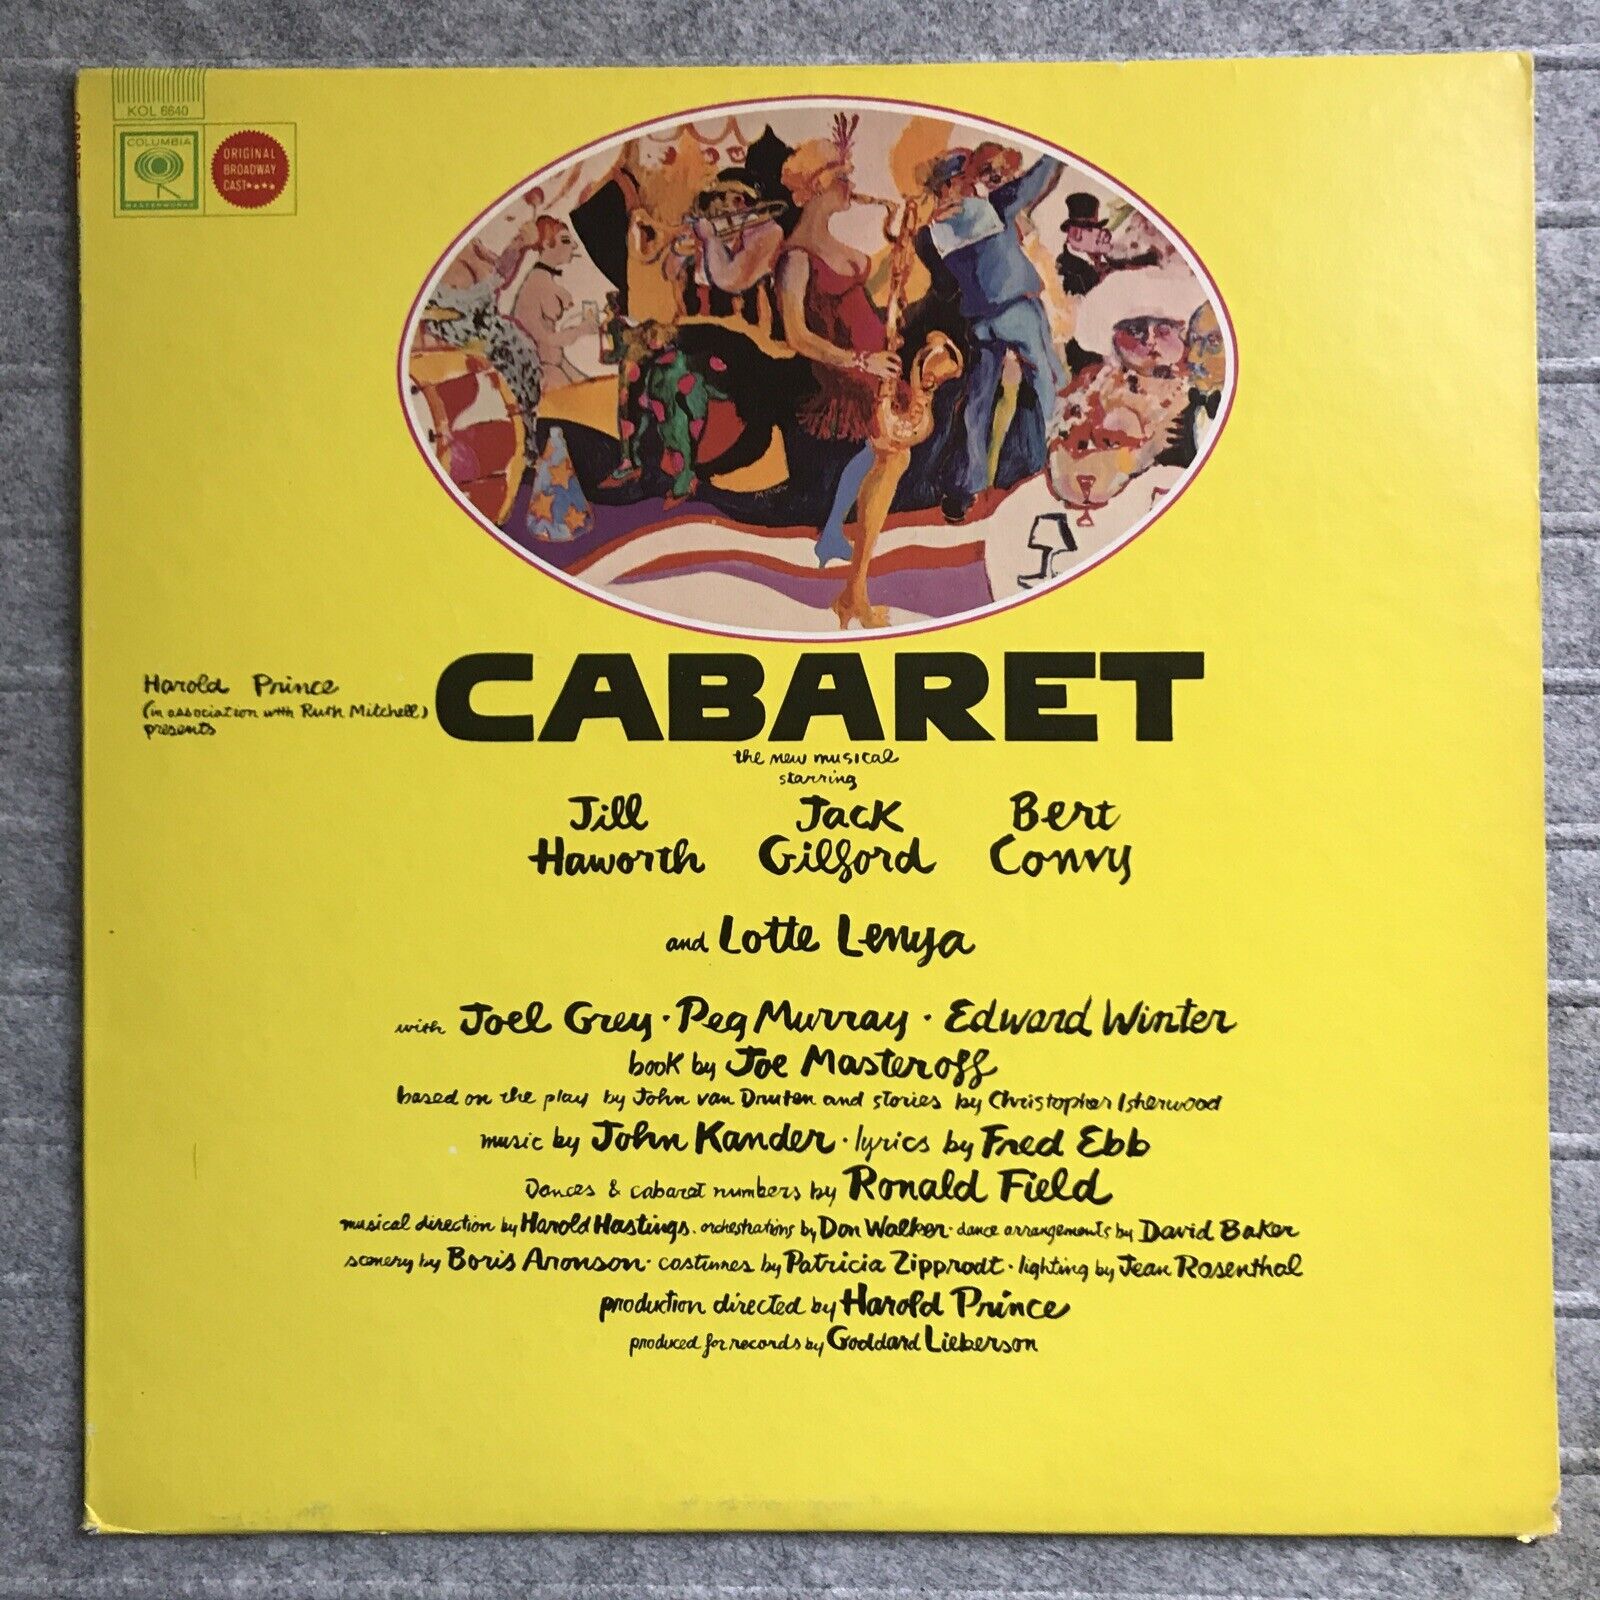 Cabaret - Musical Soundtrack : Lotte Lenya : Vinyl Record : KOL 6640